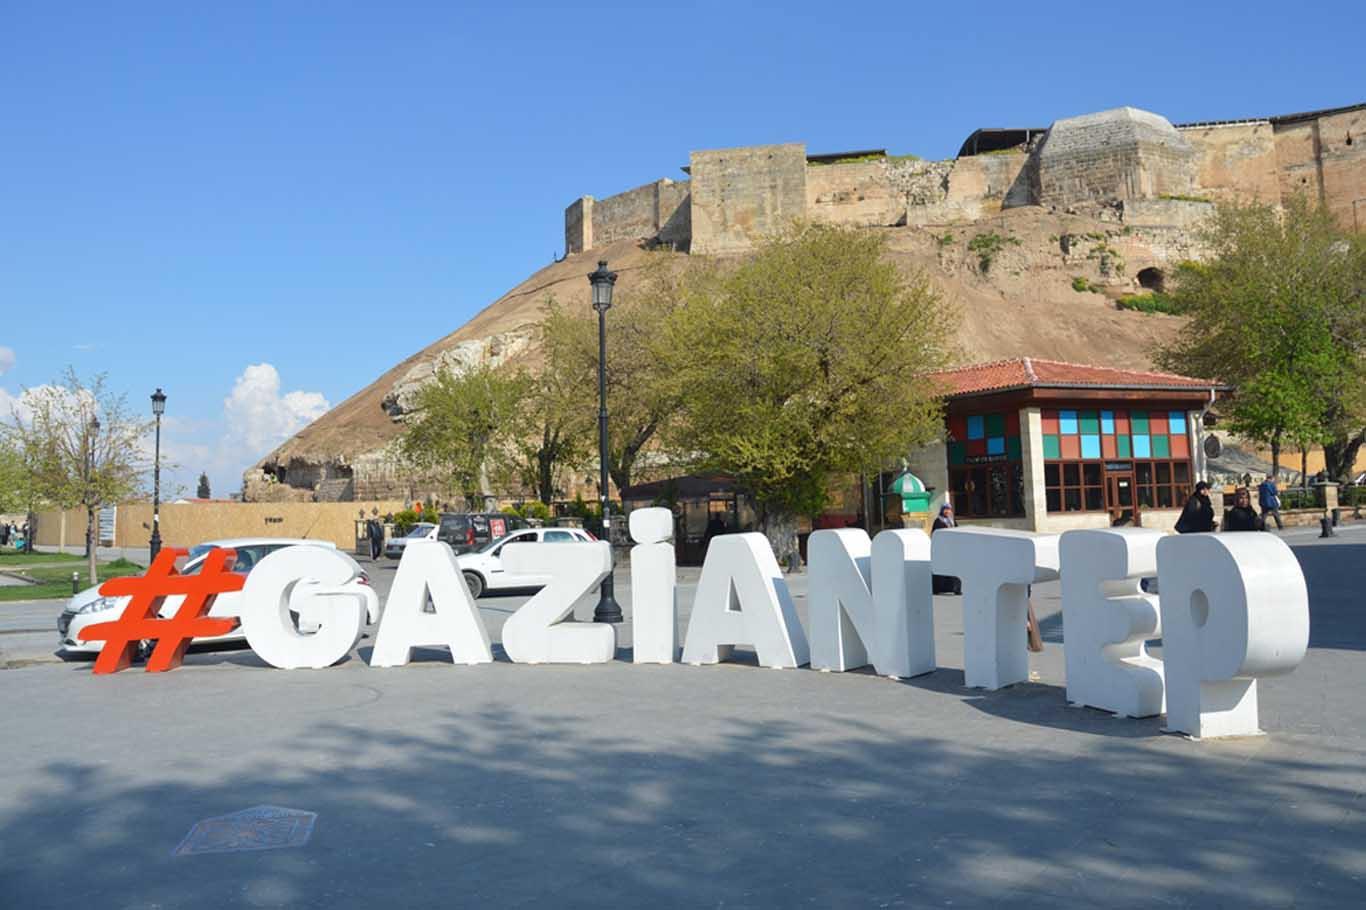 "Gaziantep'te 16 bin kişi istihdam edildi"